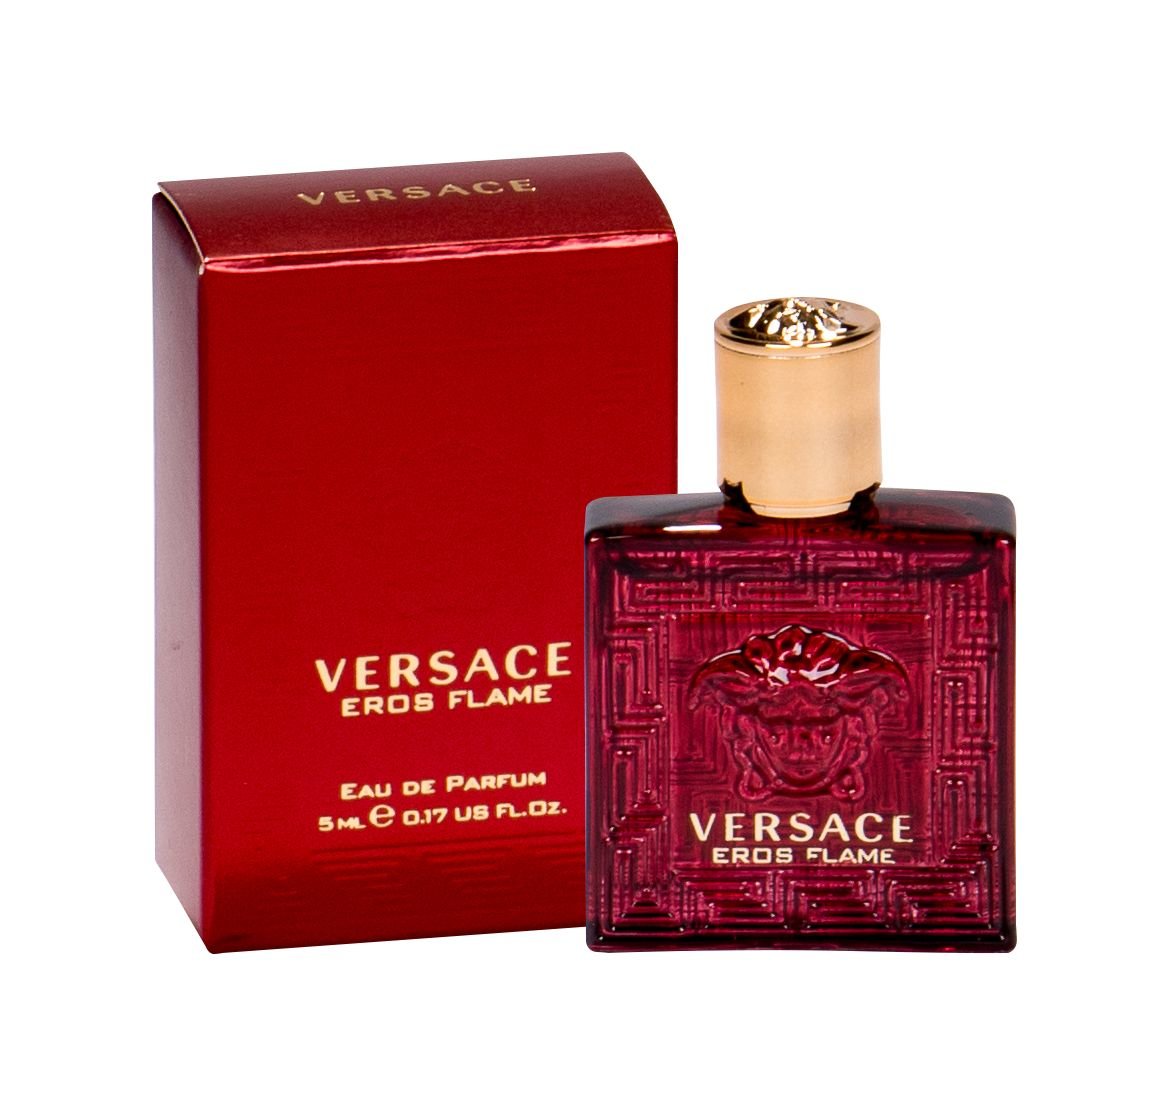 Versace Eros Flame, EDP 5ml